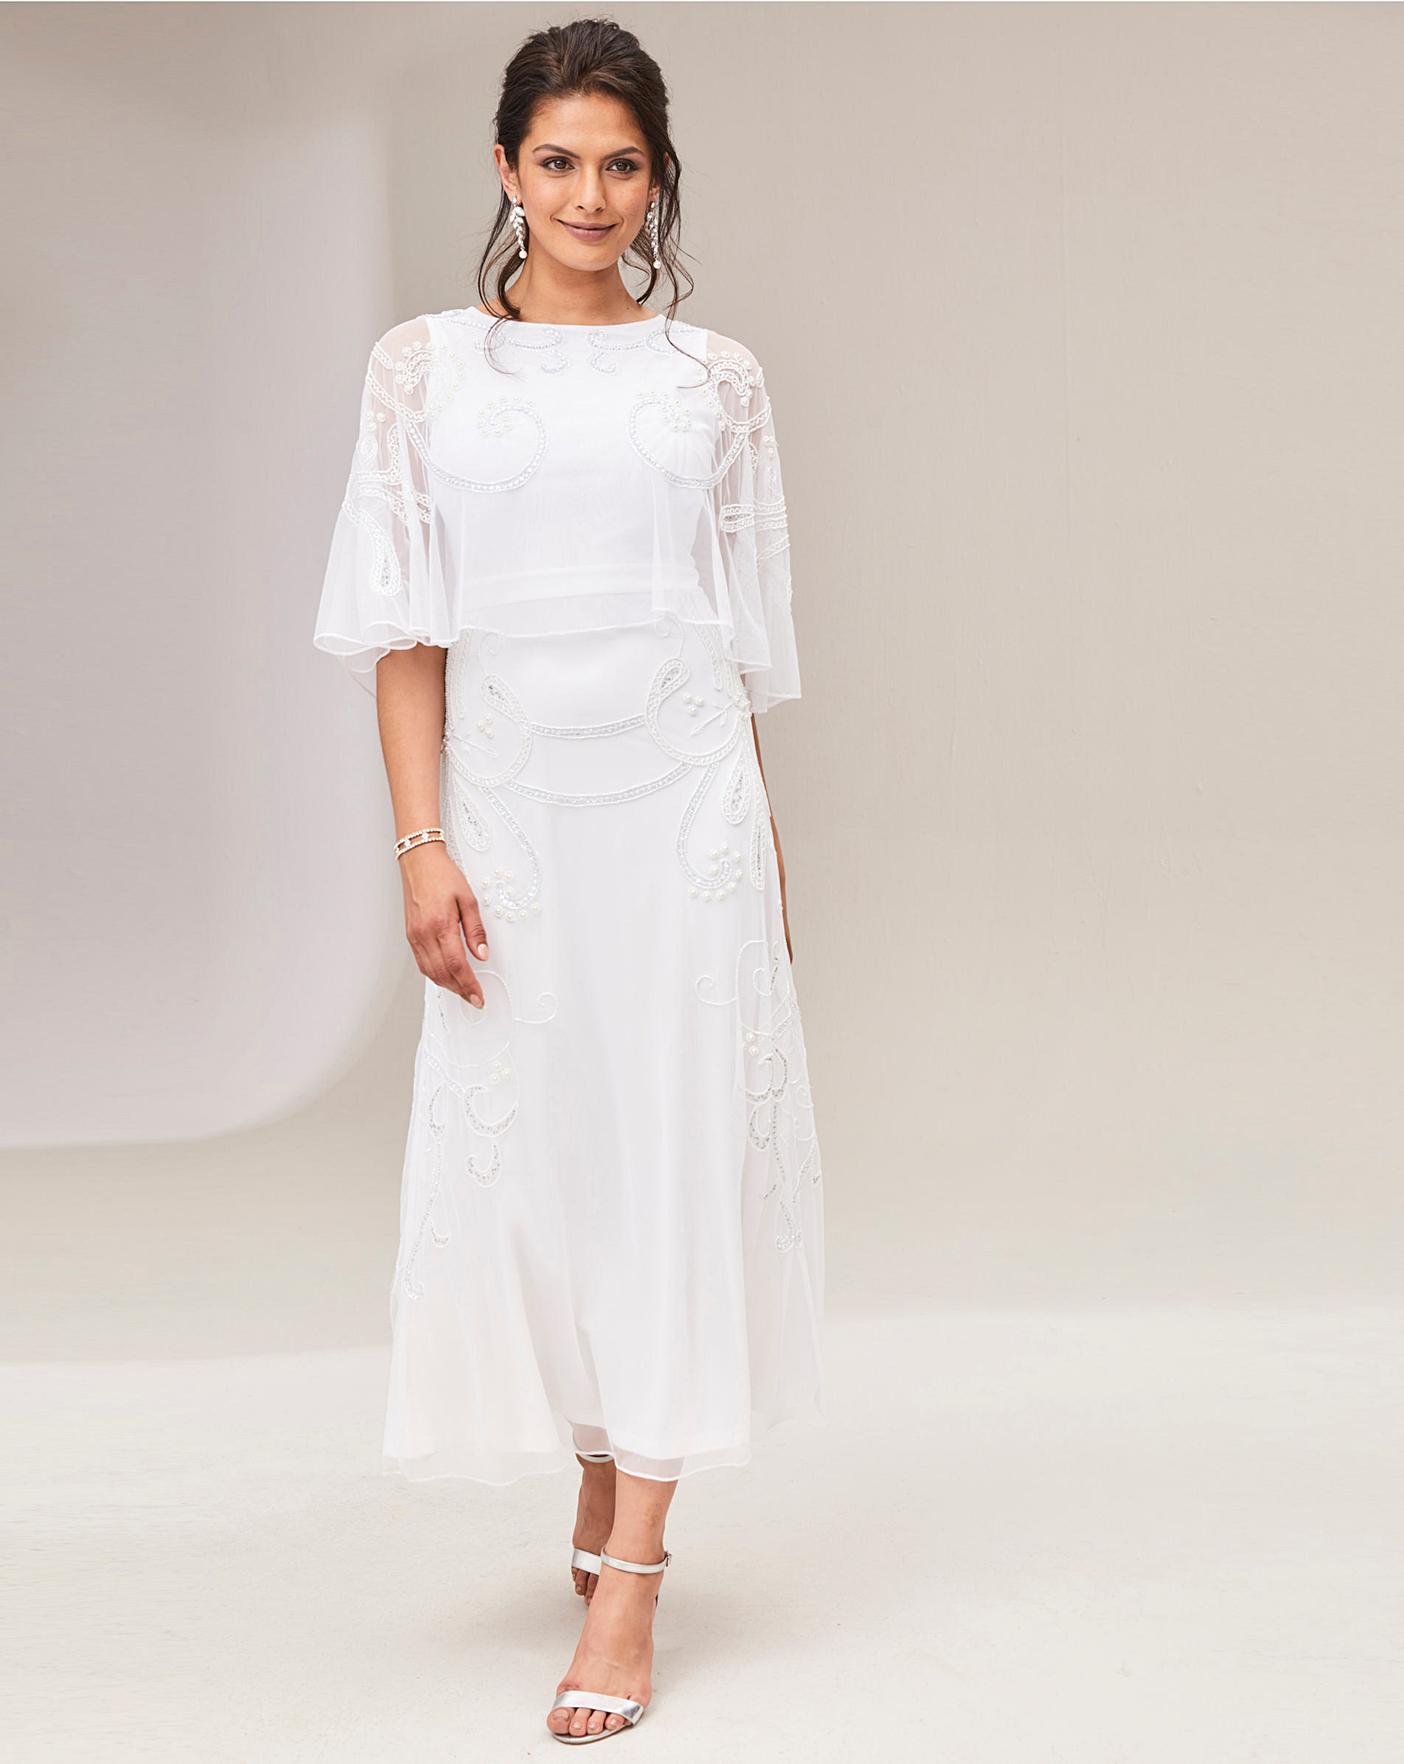 JOANNA HOPE Embellished Maxi Dress  Plus size wedding guest dresses,  Casual dresses for women, Maxi dress